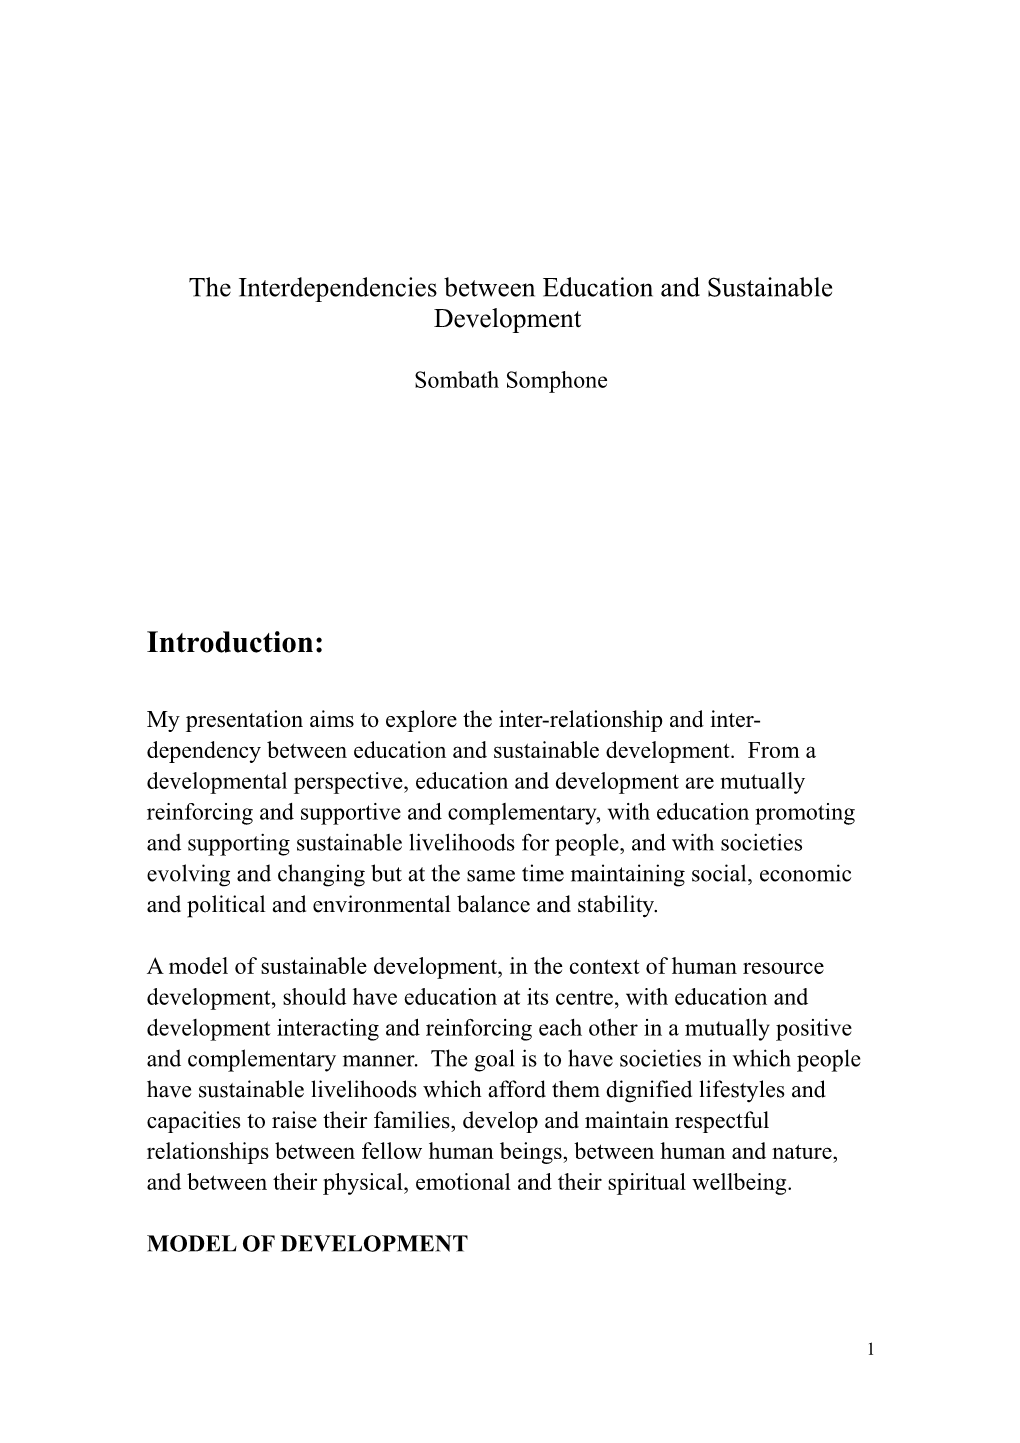 The Interdependencies Betweeneducation and Sustainable Development